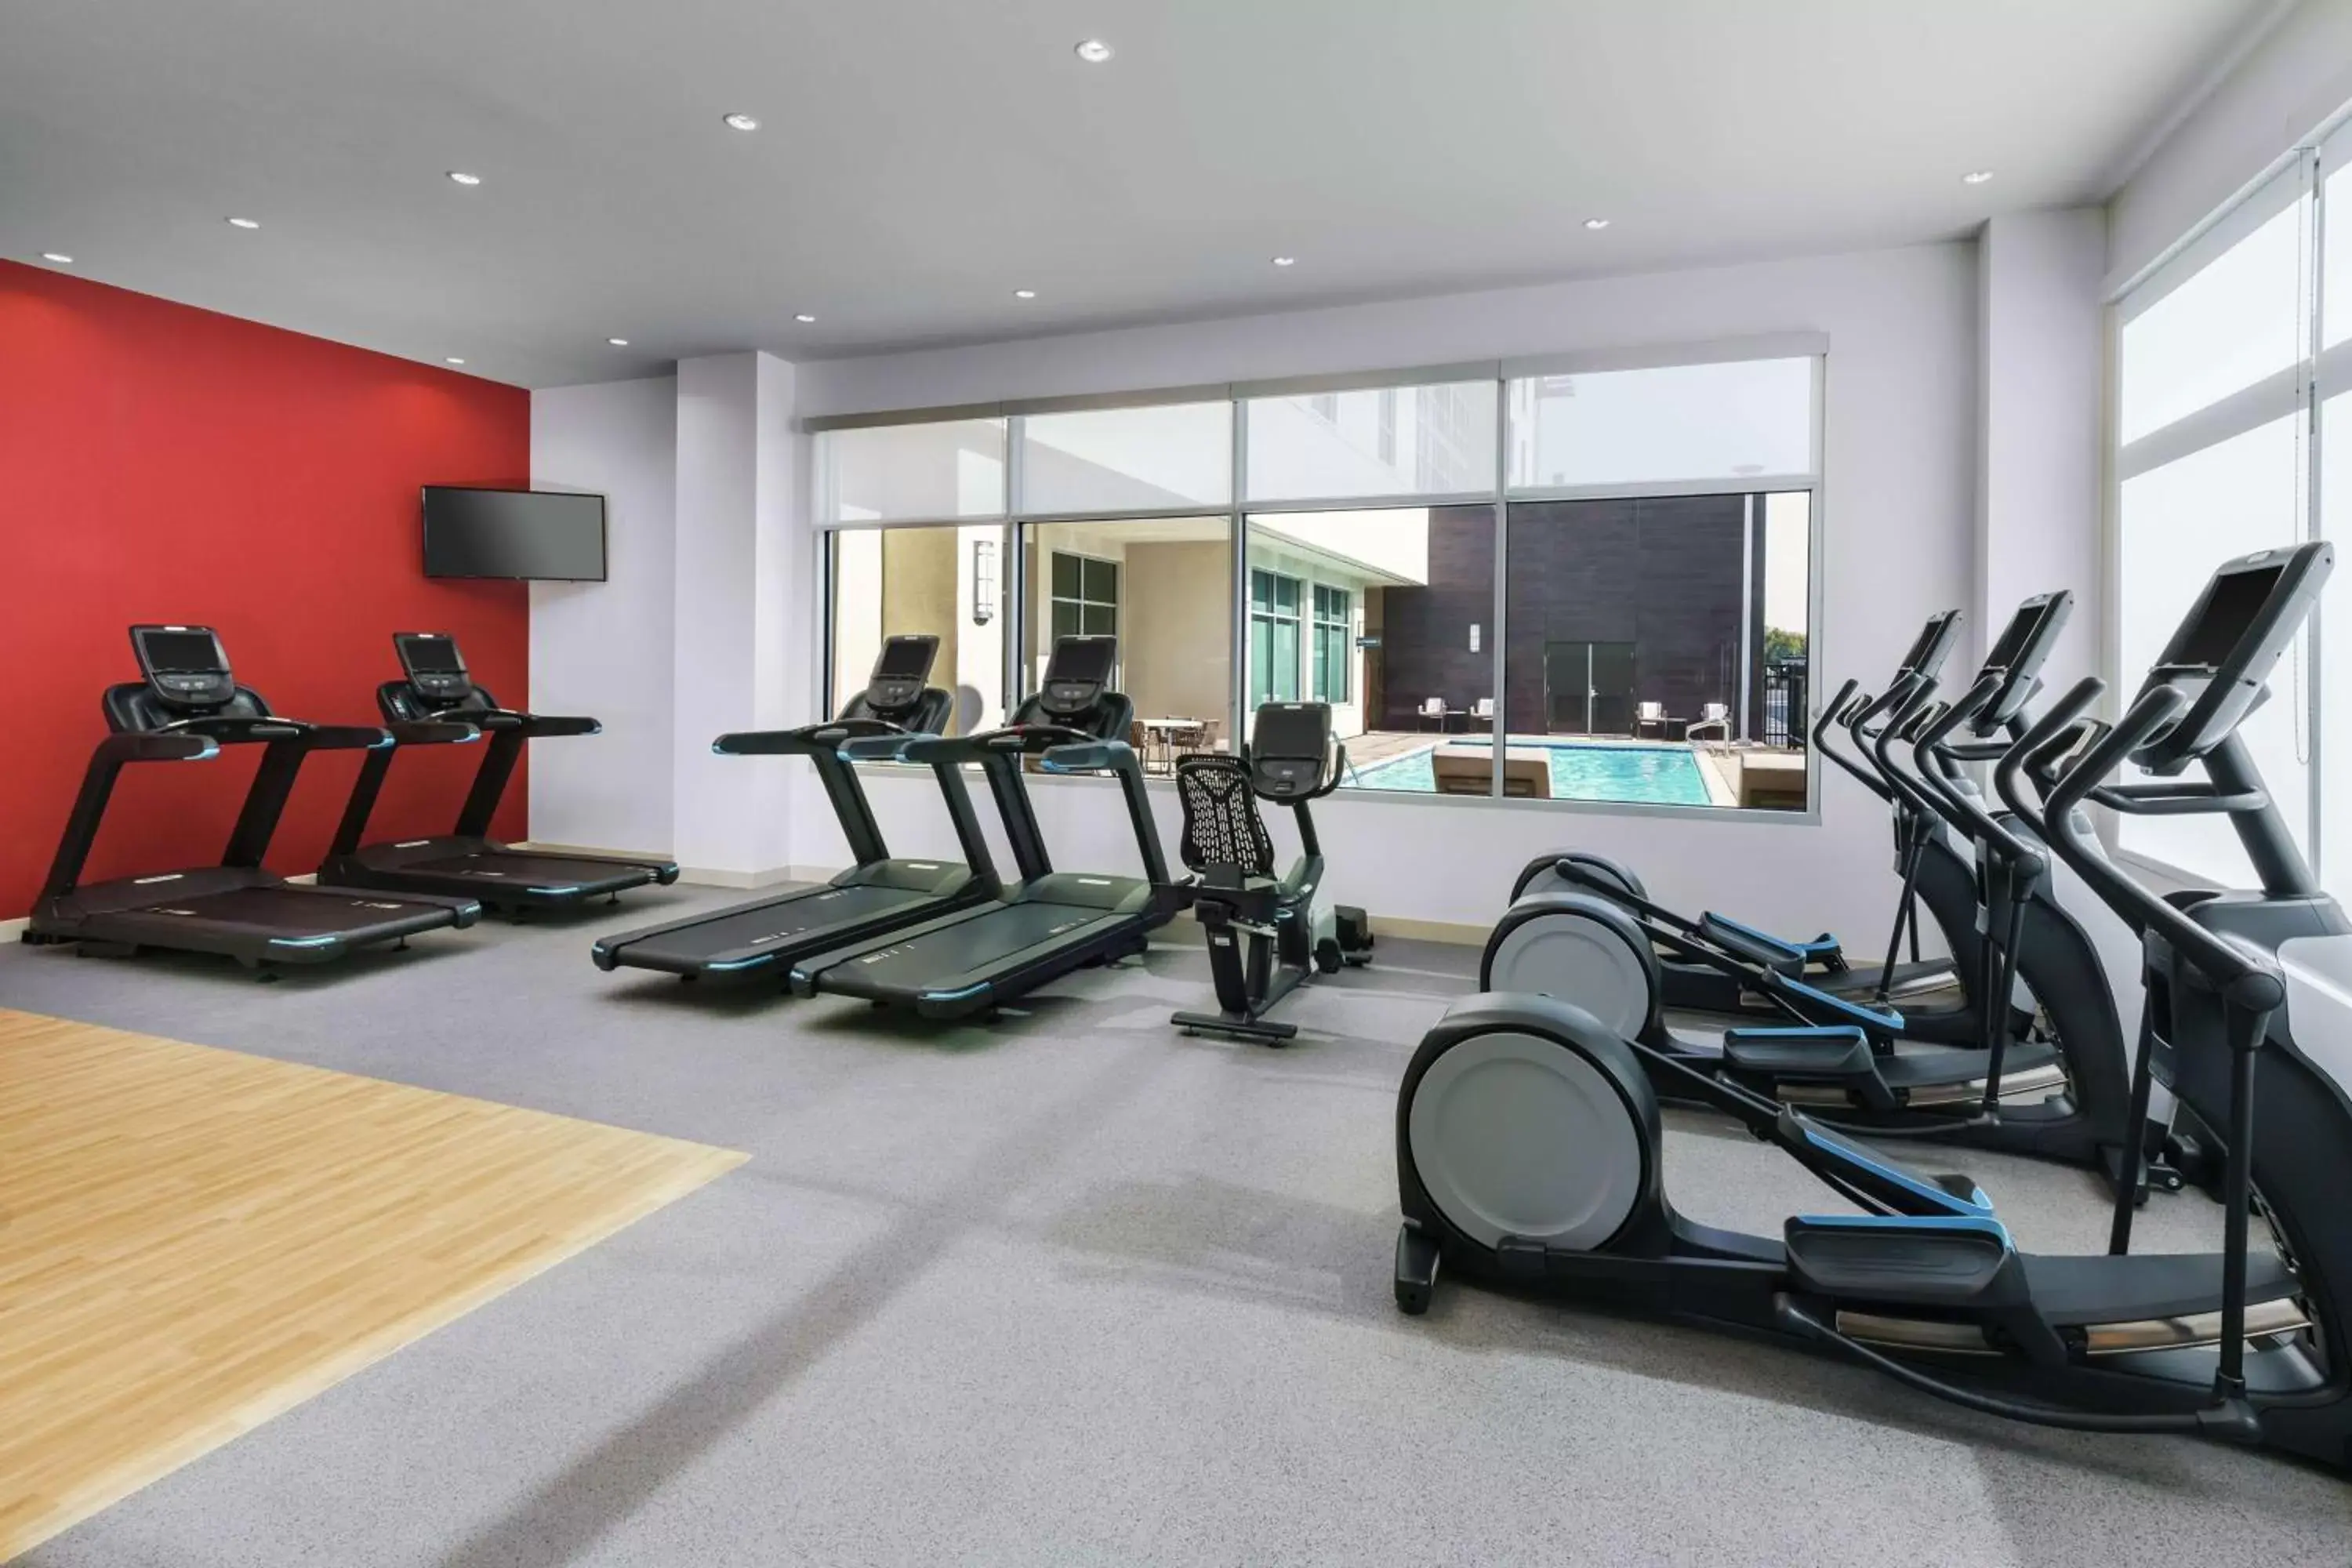 Fitness centre/facilities, Fitness Center/Facilities in Hilton Garden Inn Sunnyvale